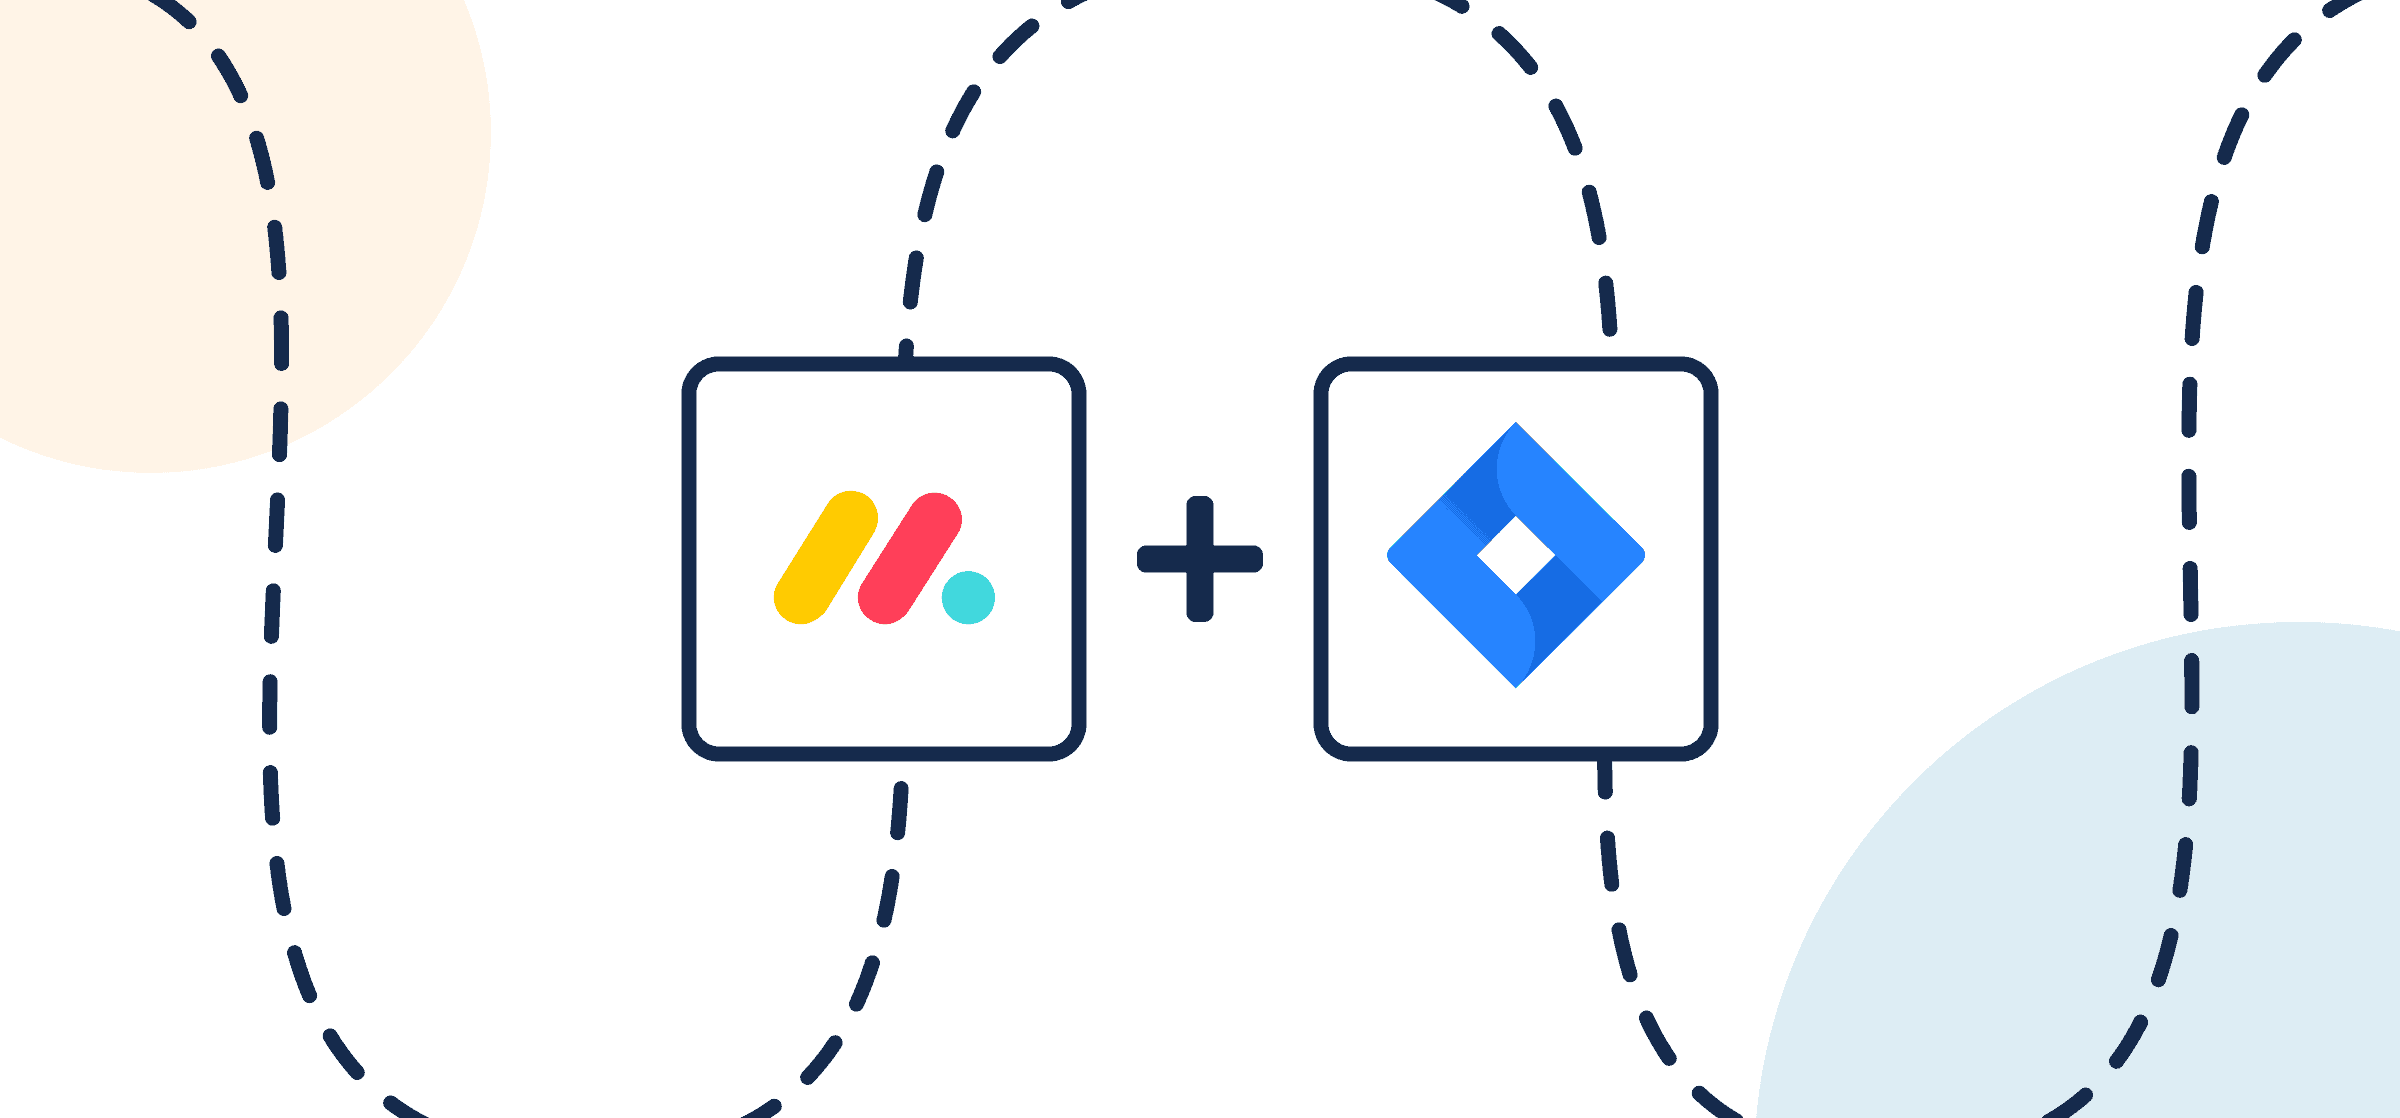 Logos for monday.com, Jira, and Unito, representing Unito's two-way integration.